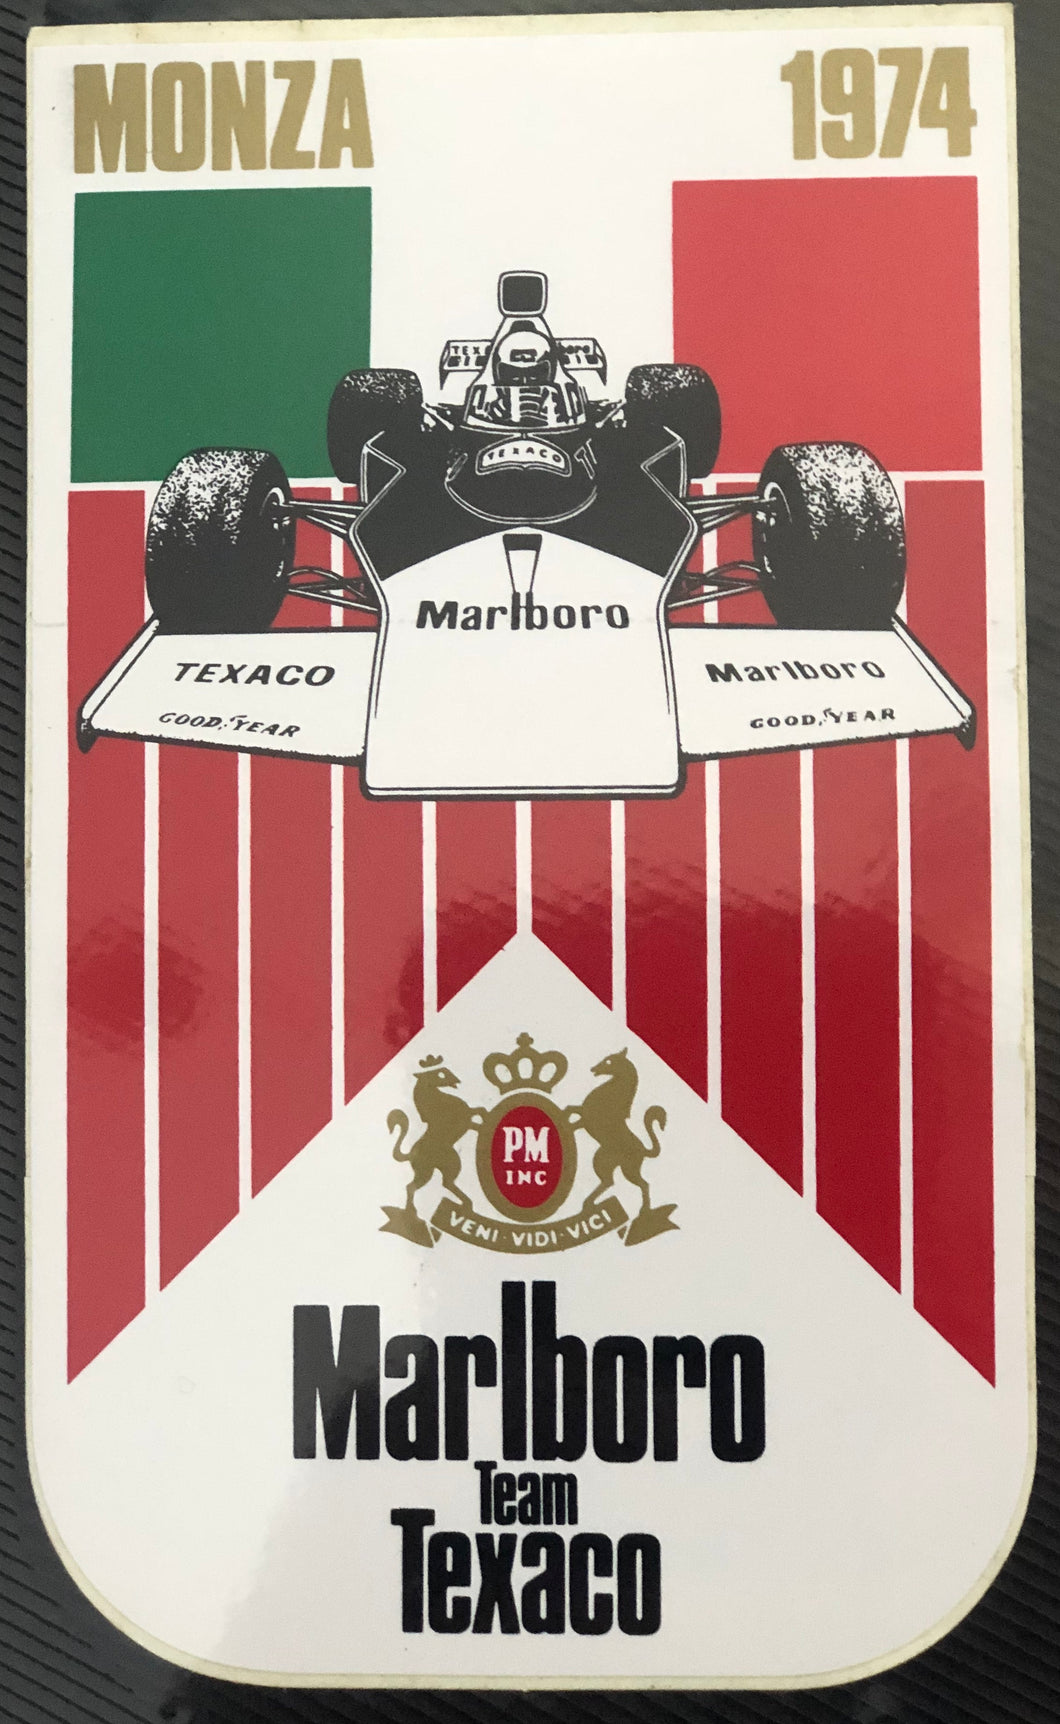 Marlboro team Texaco - Italian 1974